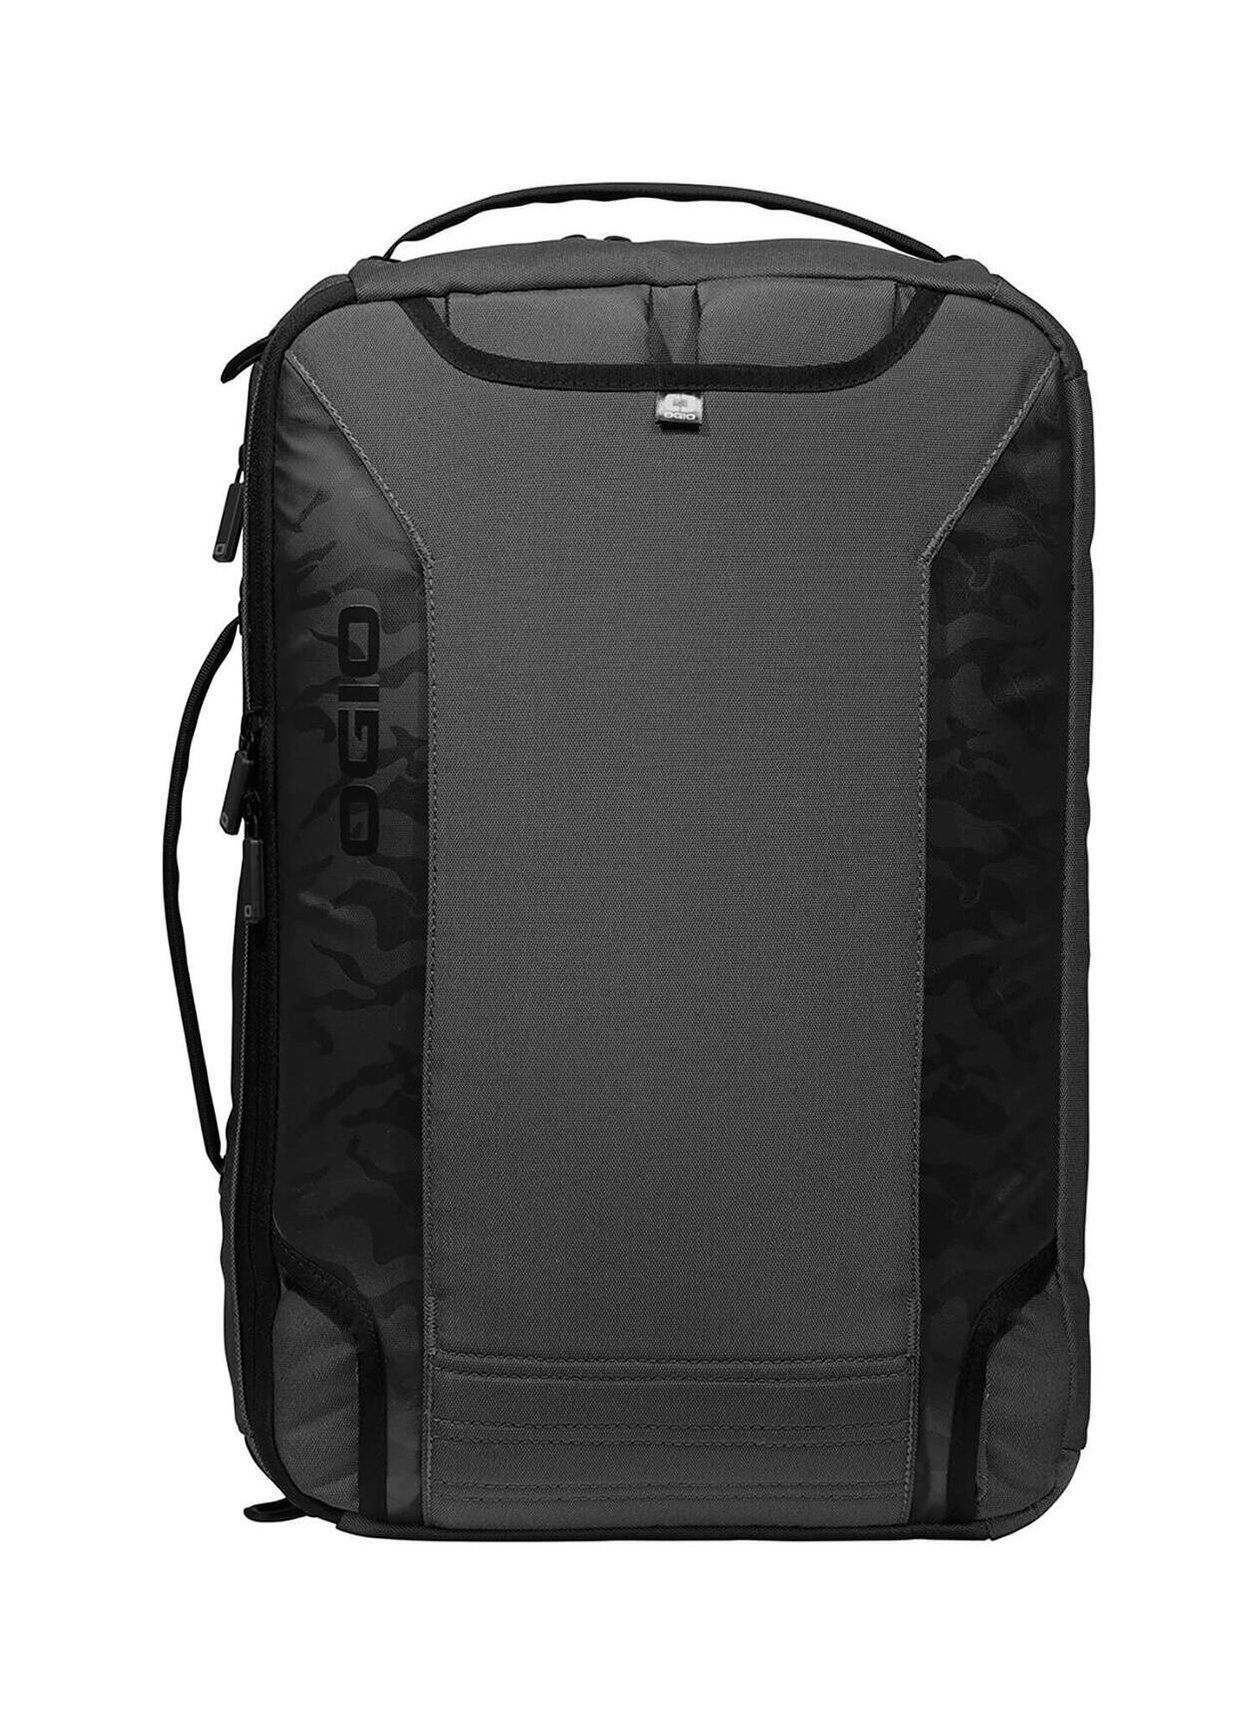 OGIO Tarmac Convert Backpack